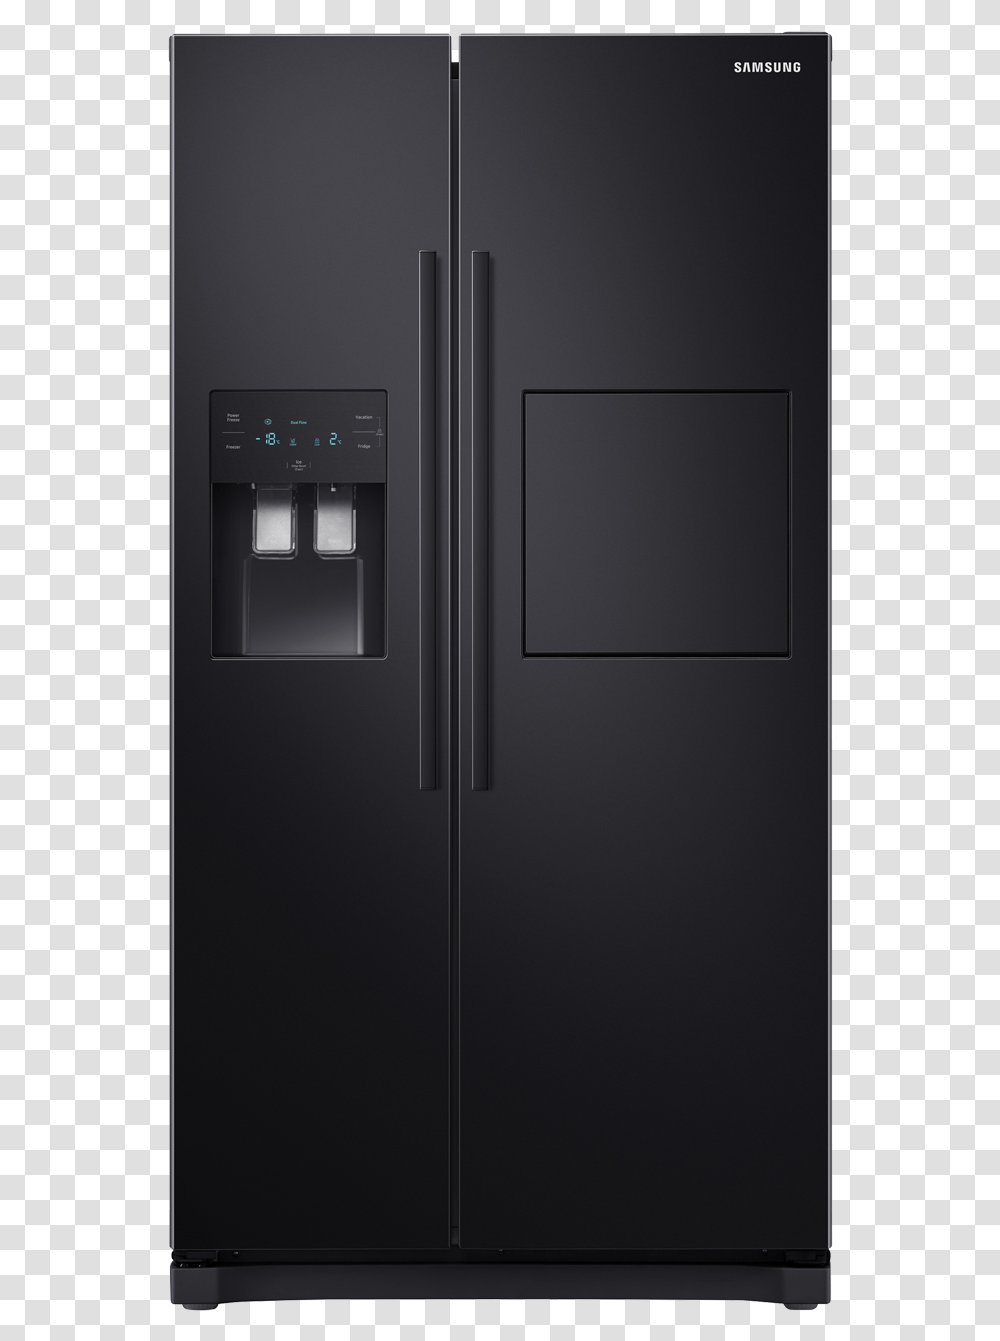 Samsung Fridge 2 Doors, Appliance, Refrigerator Transparent Png